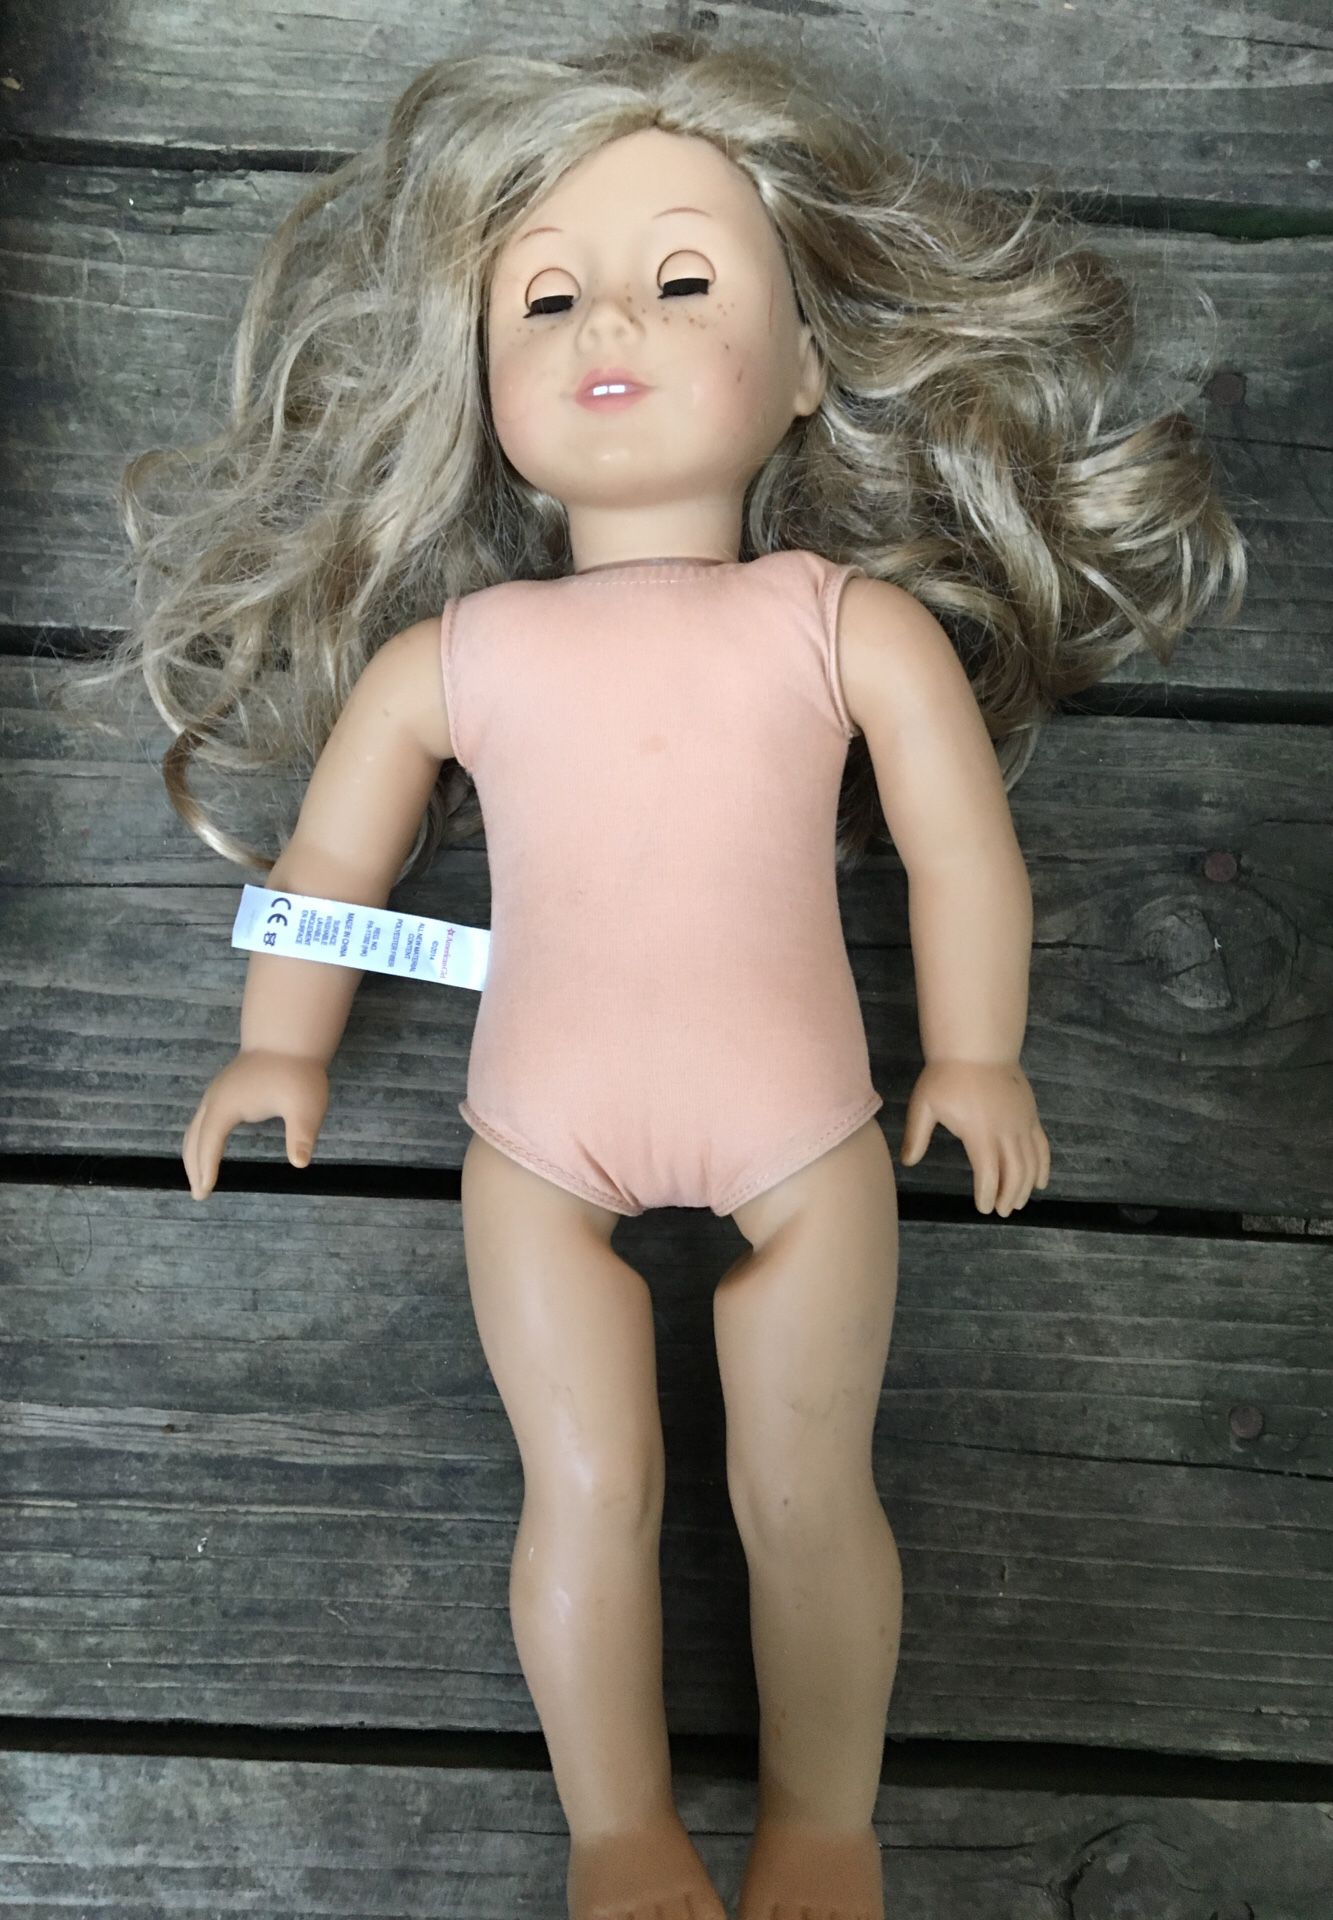 American girl doll 2014